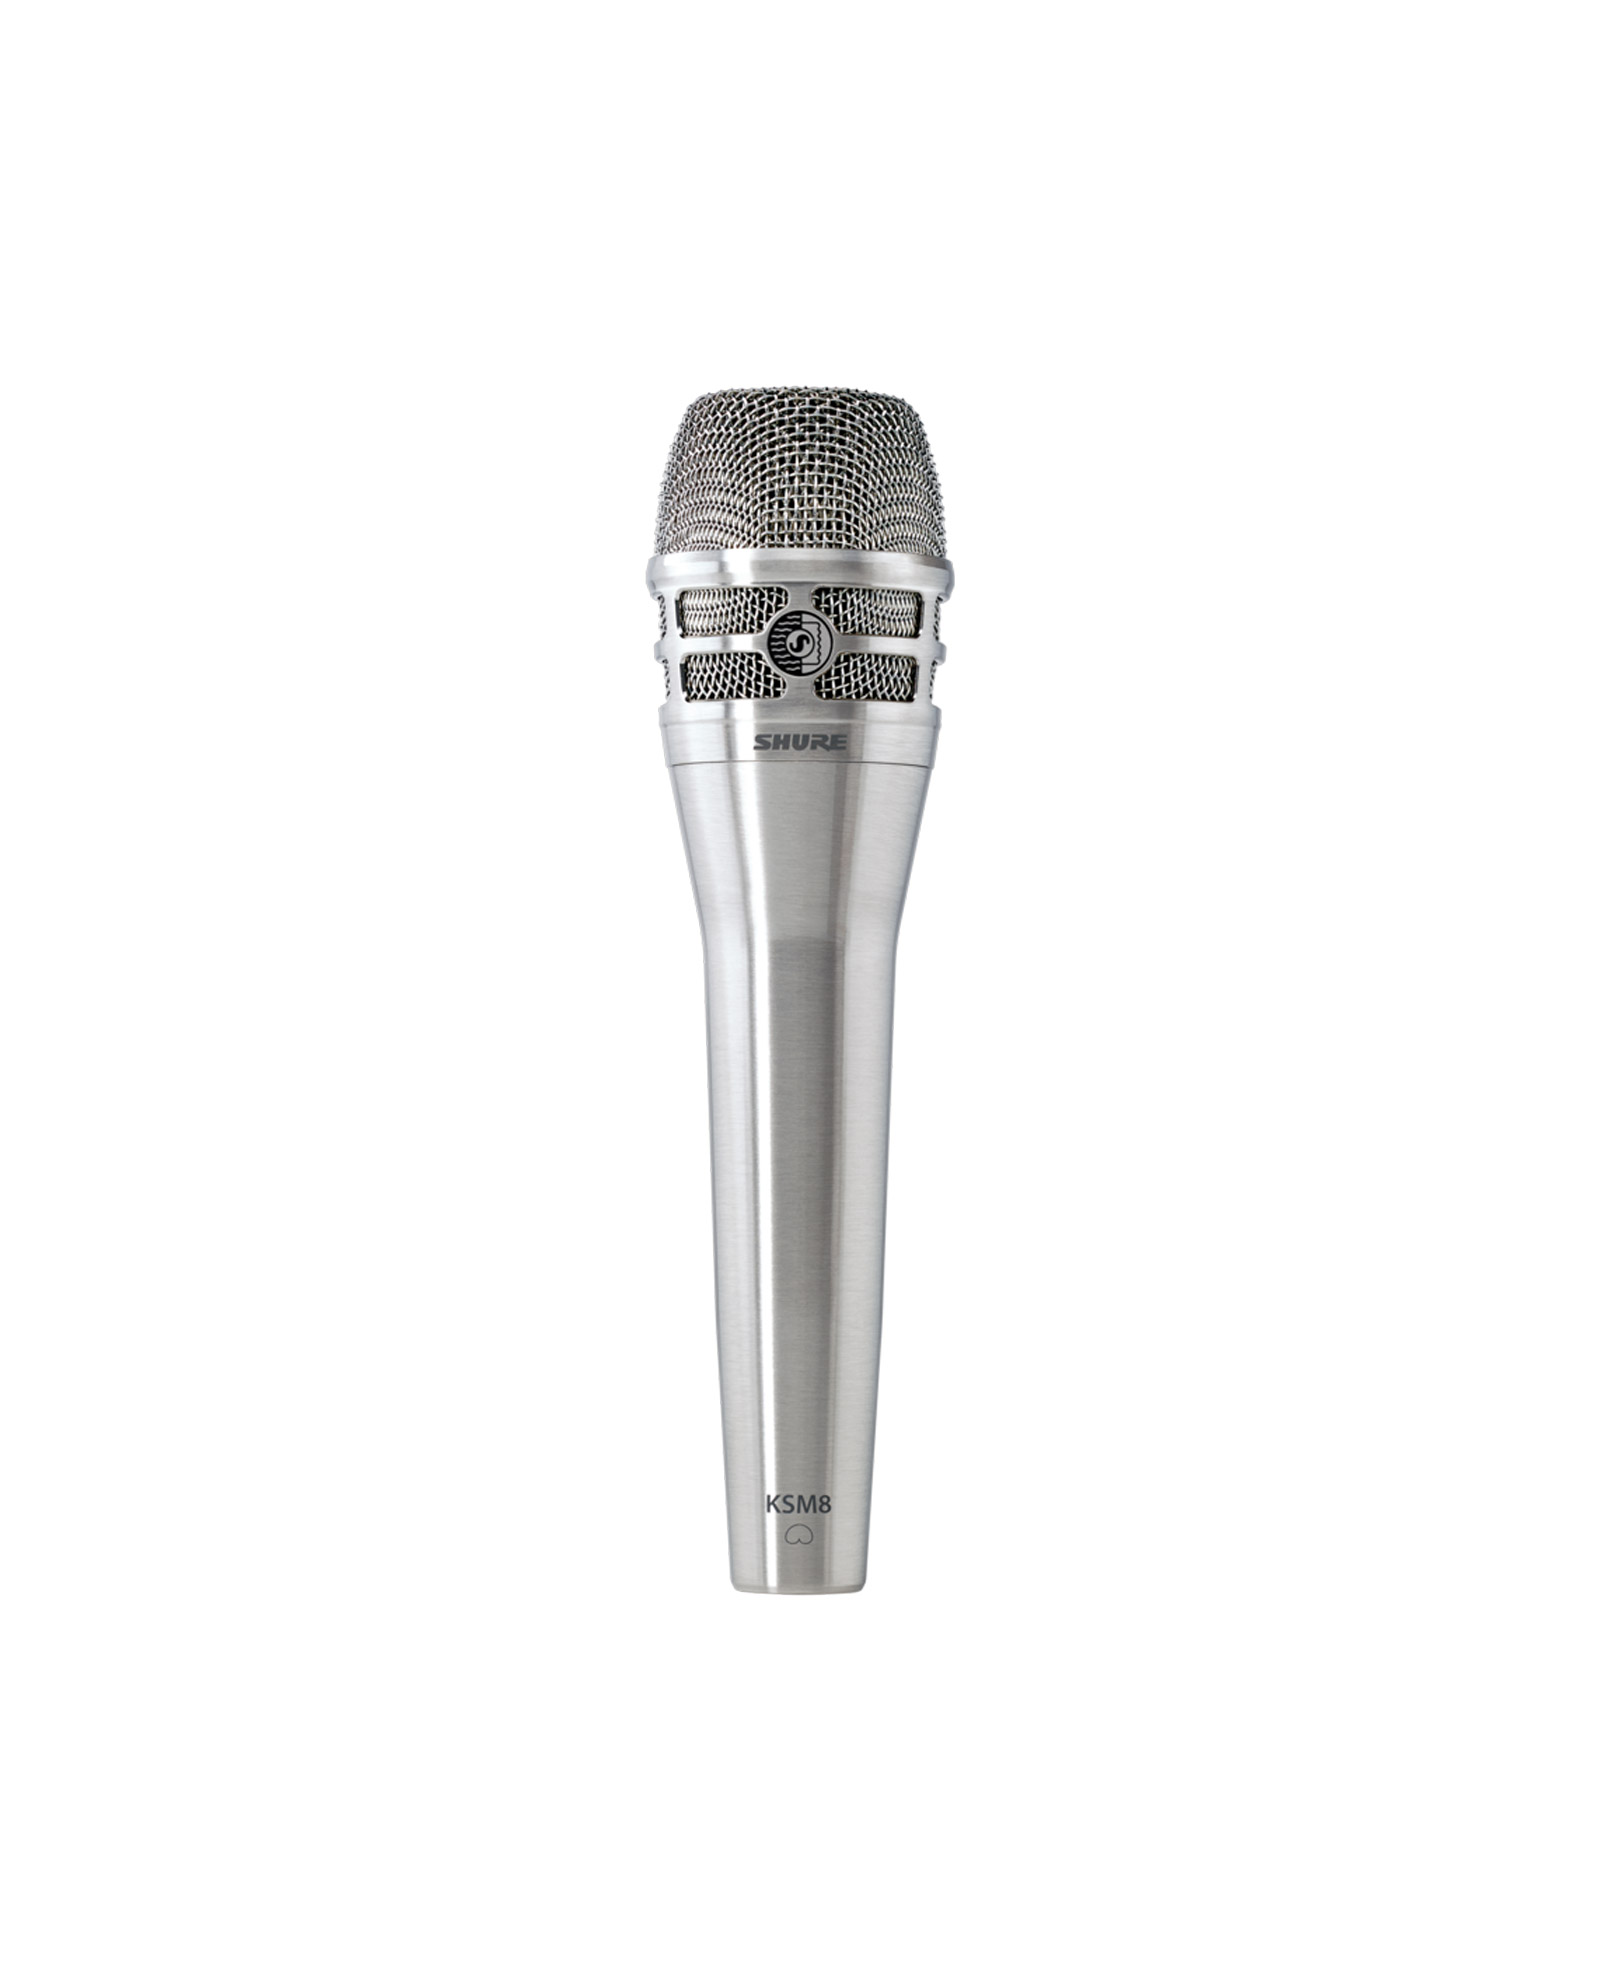 Shure Ksm8 Dualdyne Cardioid Dynamic Vocal Microphone Nickel